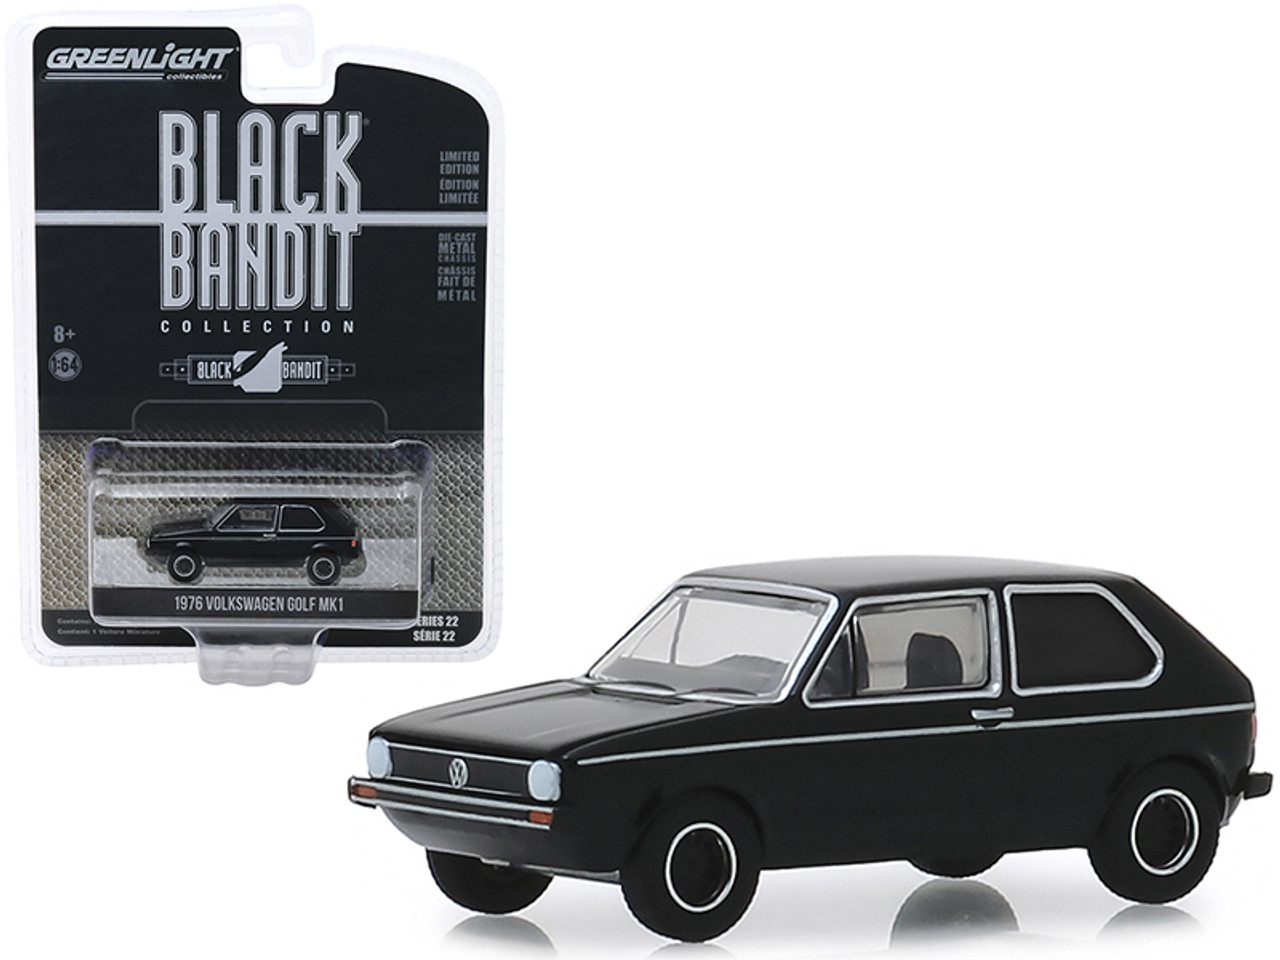 1976 Volkswagen Golf Mk1 "Black Bandit" Series 22 1/64 Diecast Model Car by Greenlight